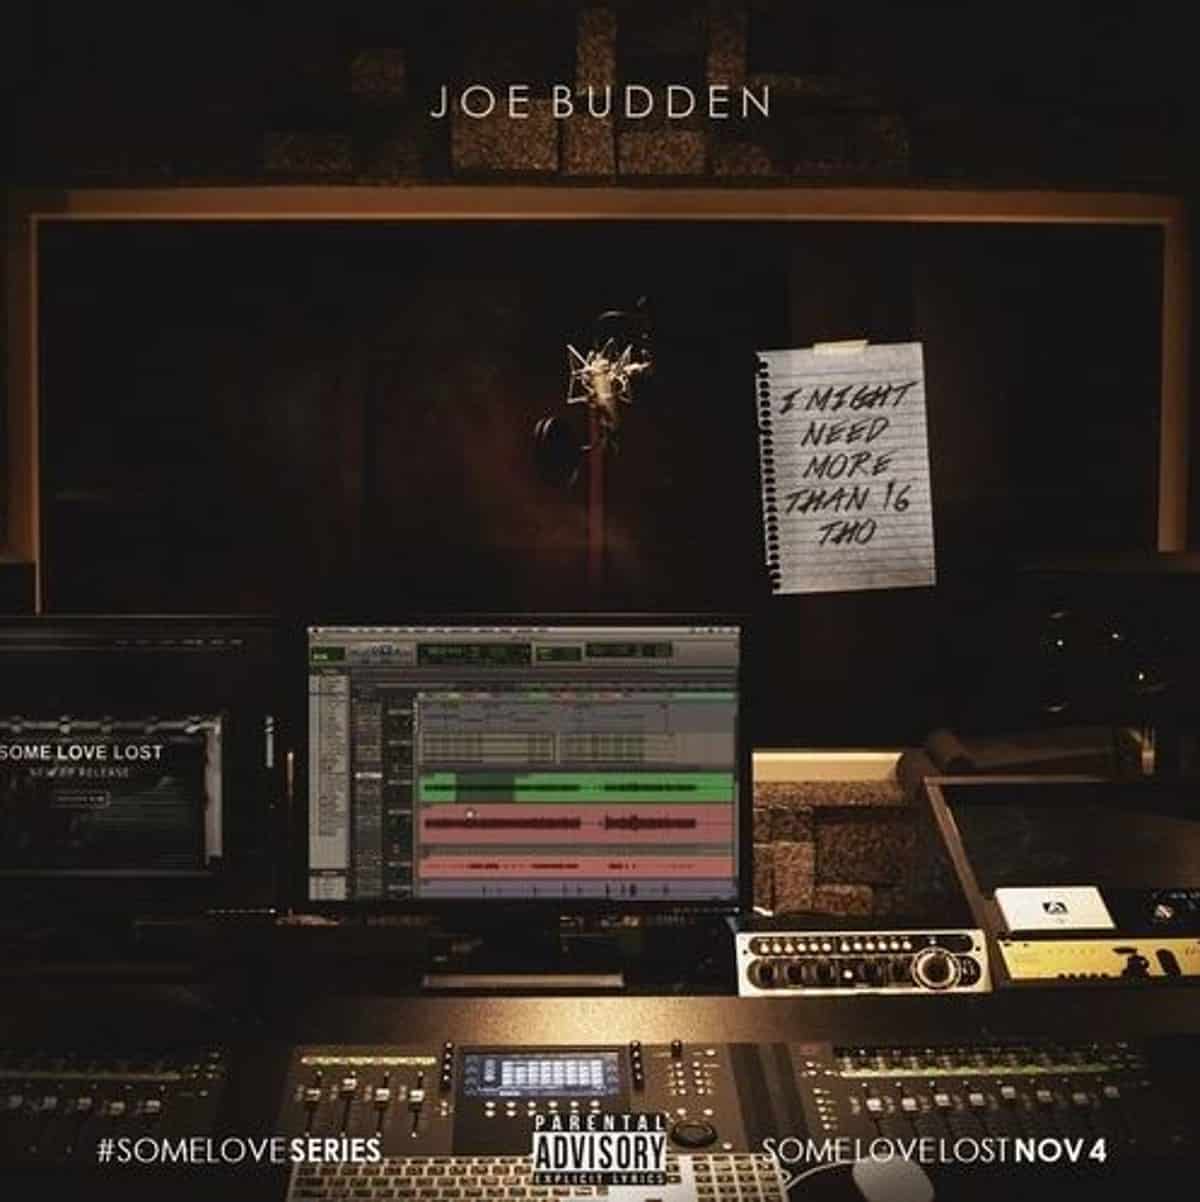 New Music Joe Budden - I Might Need More Than 16 Tho